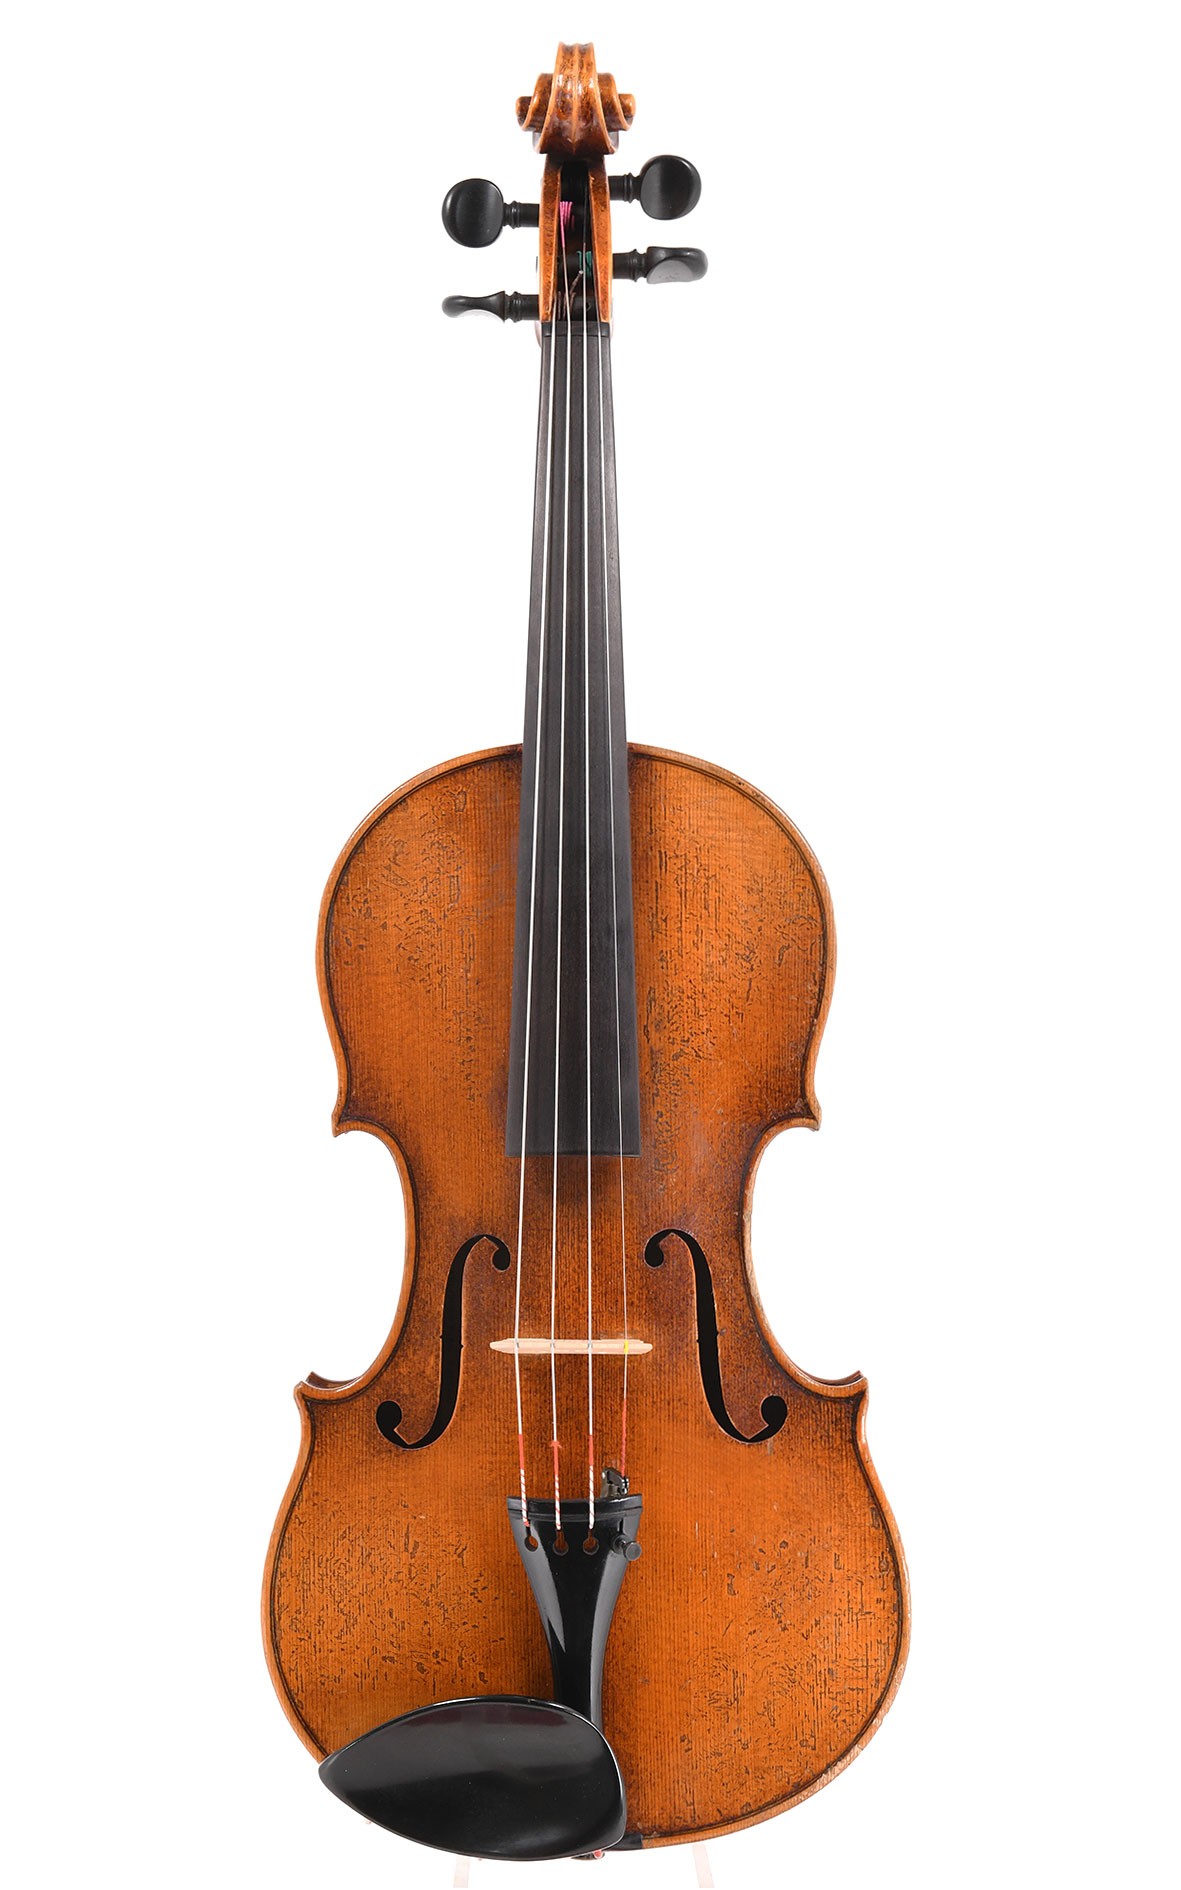 Antique violin from Saxony. Richard Paulus, circa 1900